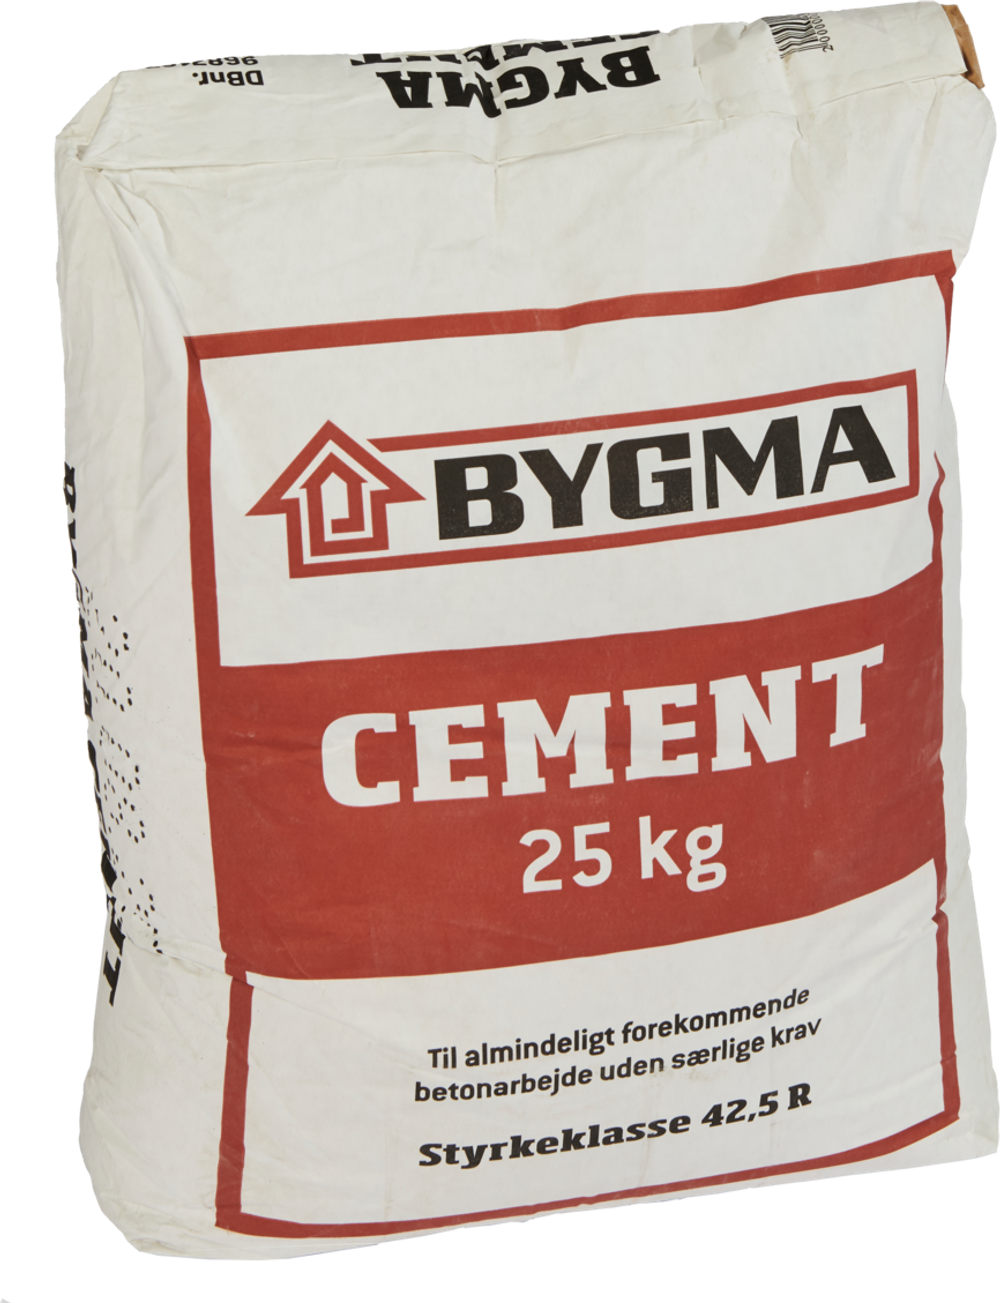 Tilbud på Cement (Bygma) fra Bygma til 62,50 kr.